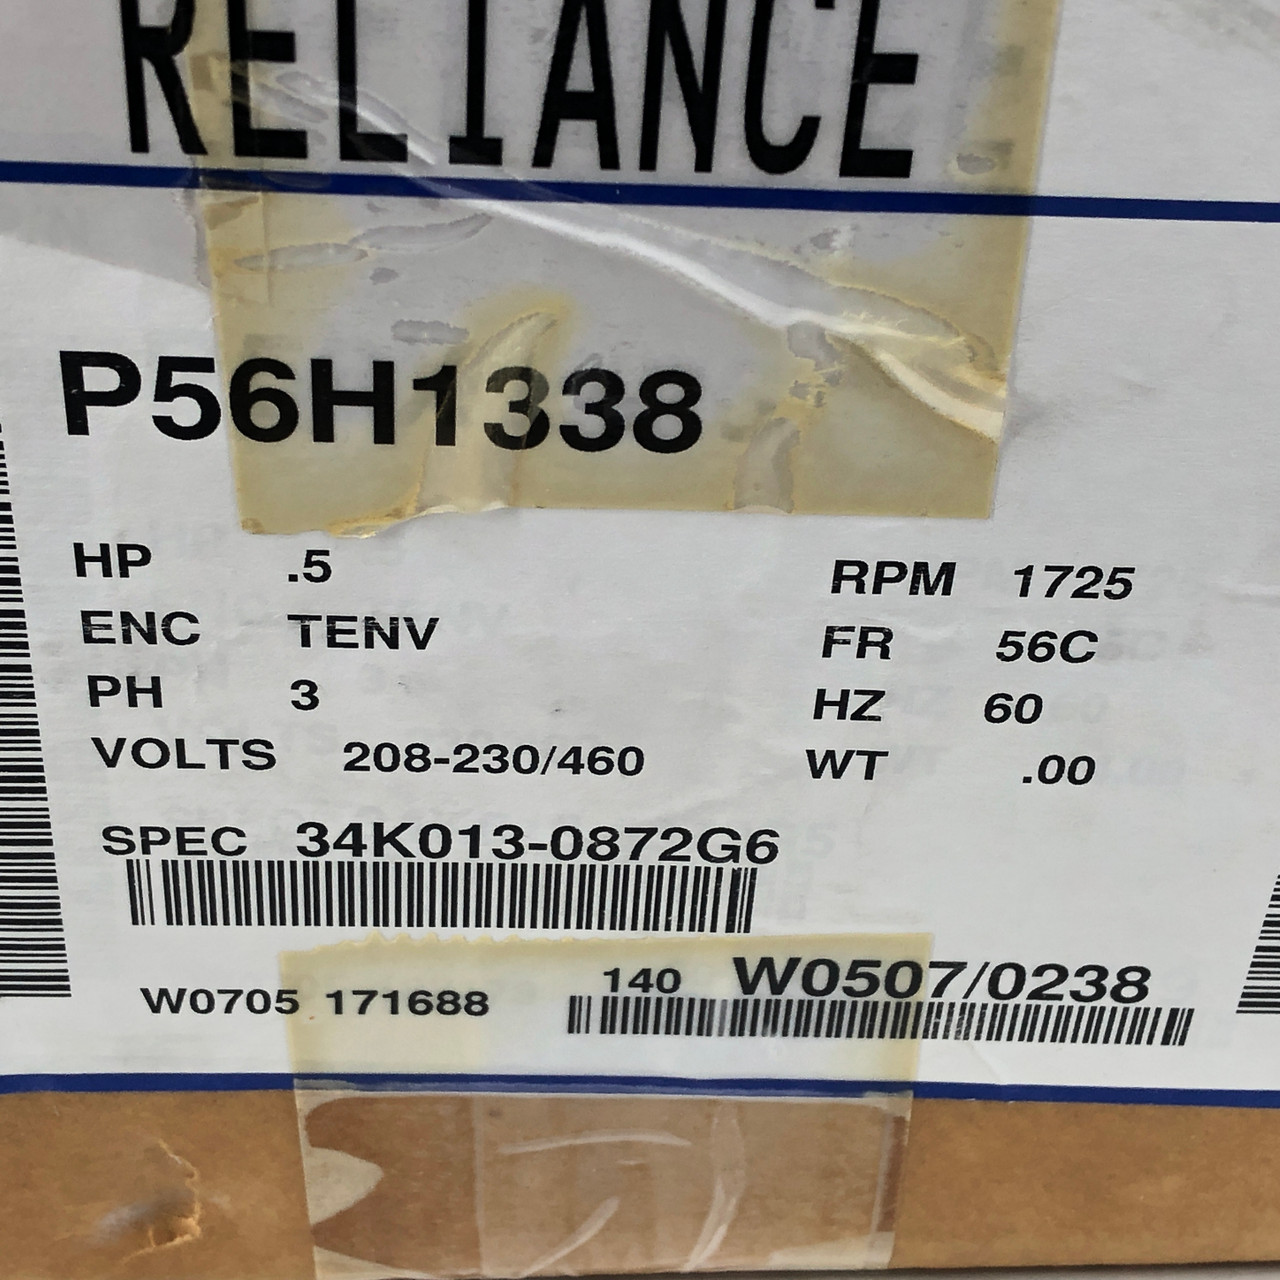 RELIANCE BALDOR MOTOR 3 PHASE 1/2 HP 1725 RPM 480V 447TS Frame P56H1338 - NEW